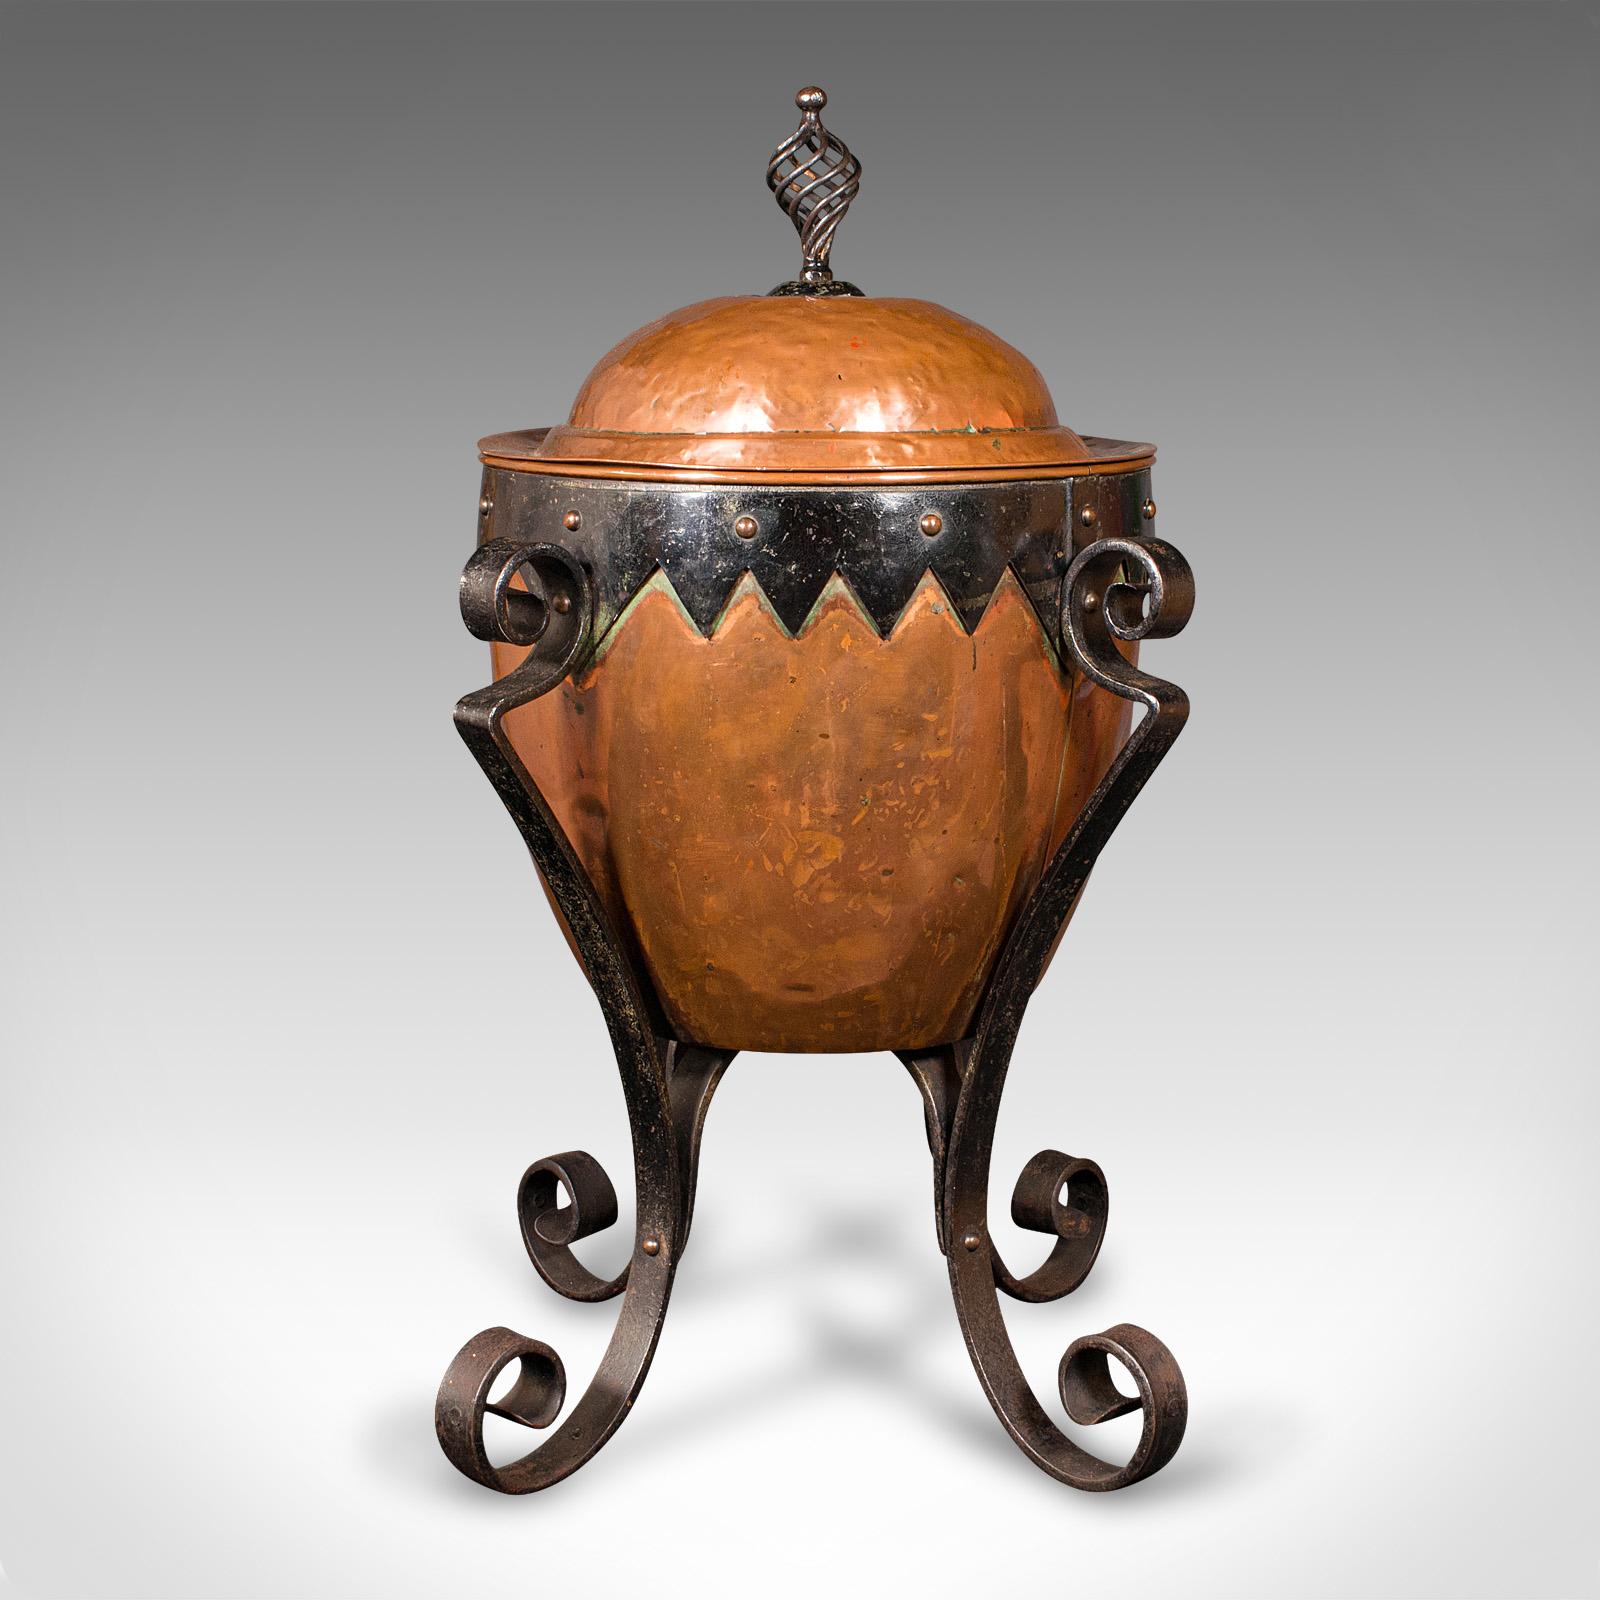 British Antique Arts and Crafts Fireside Bin, English, Copper, Log, Coal, Victorian